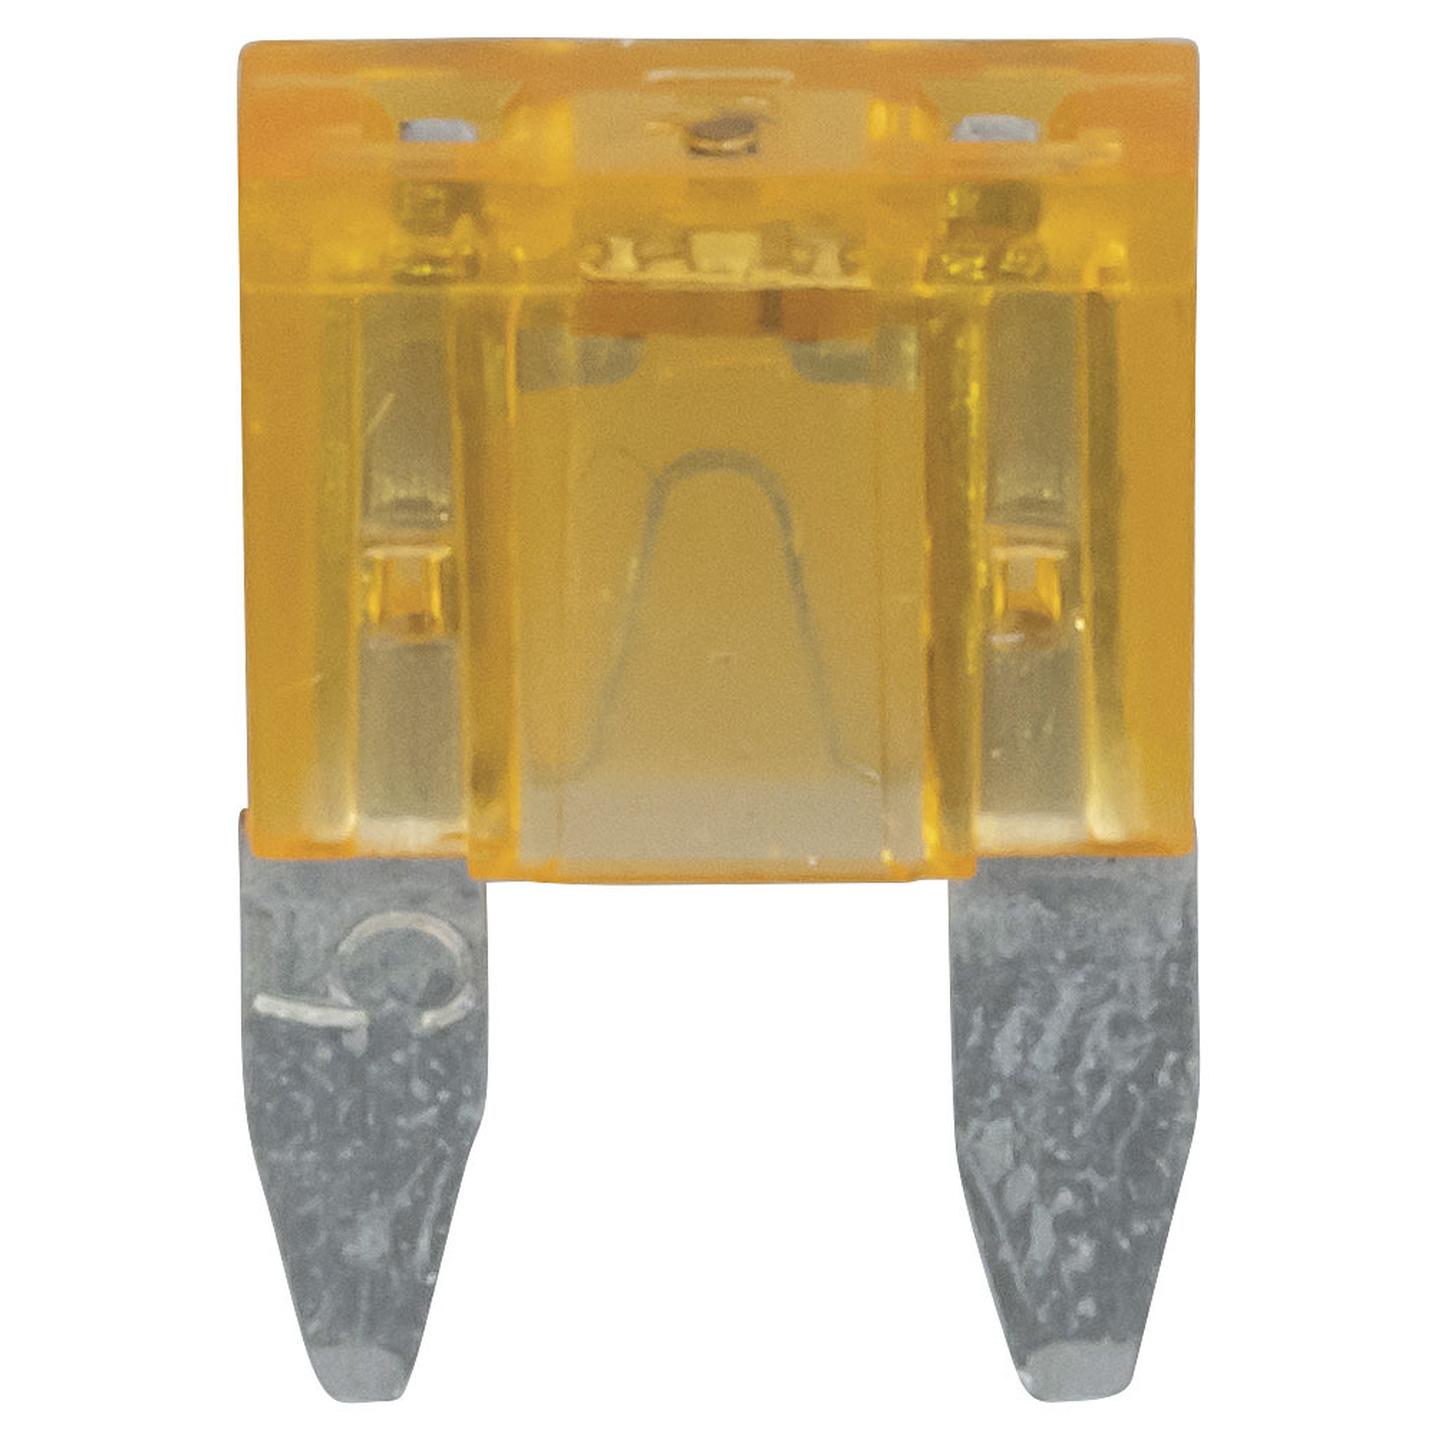 5A Orange Mini Blade Fuse with LED Indicator